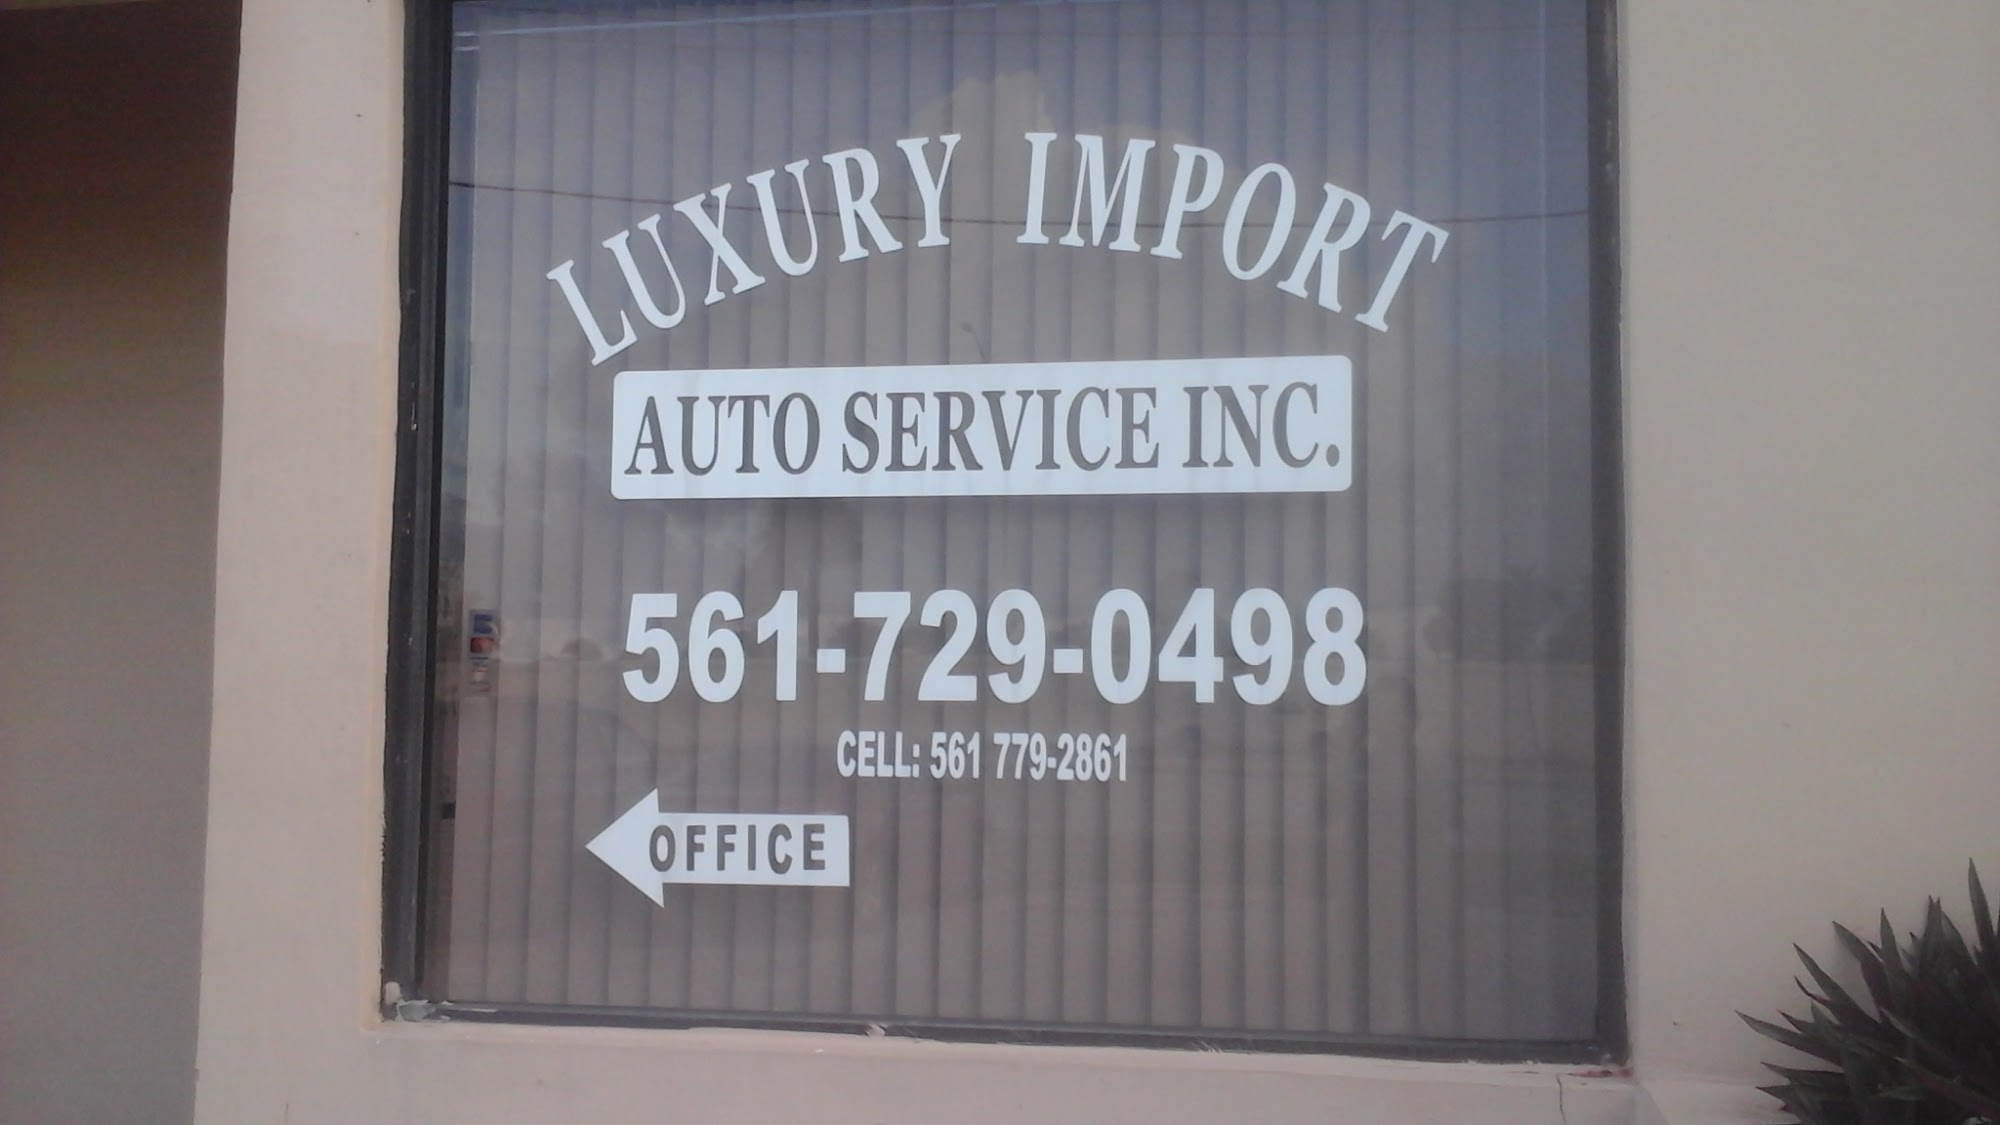 Luxury Import Auto Service Inc.